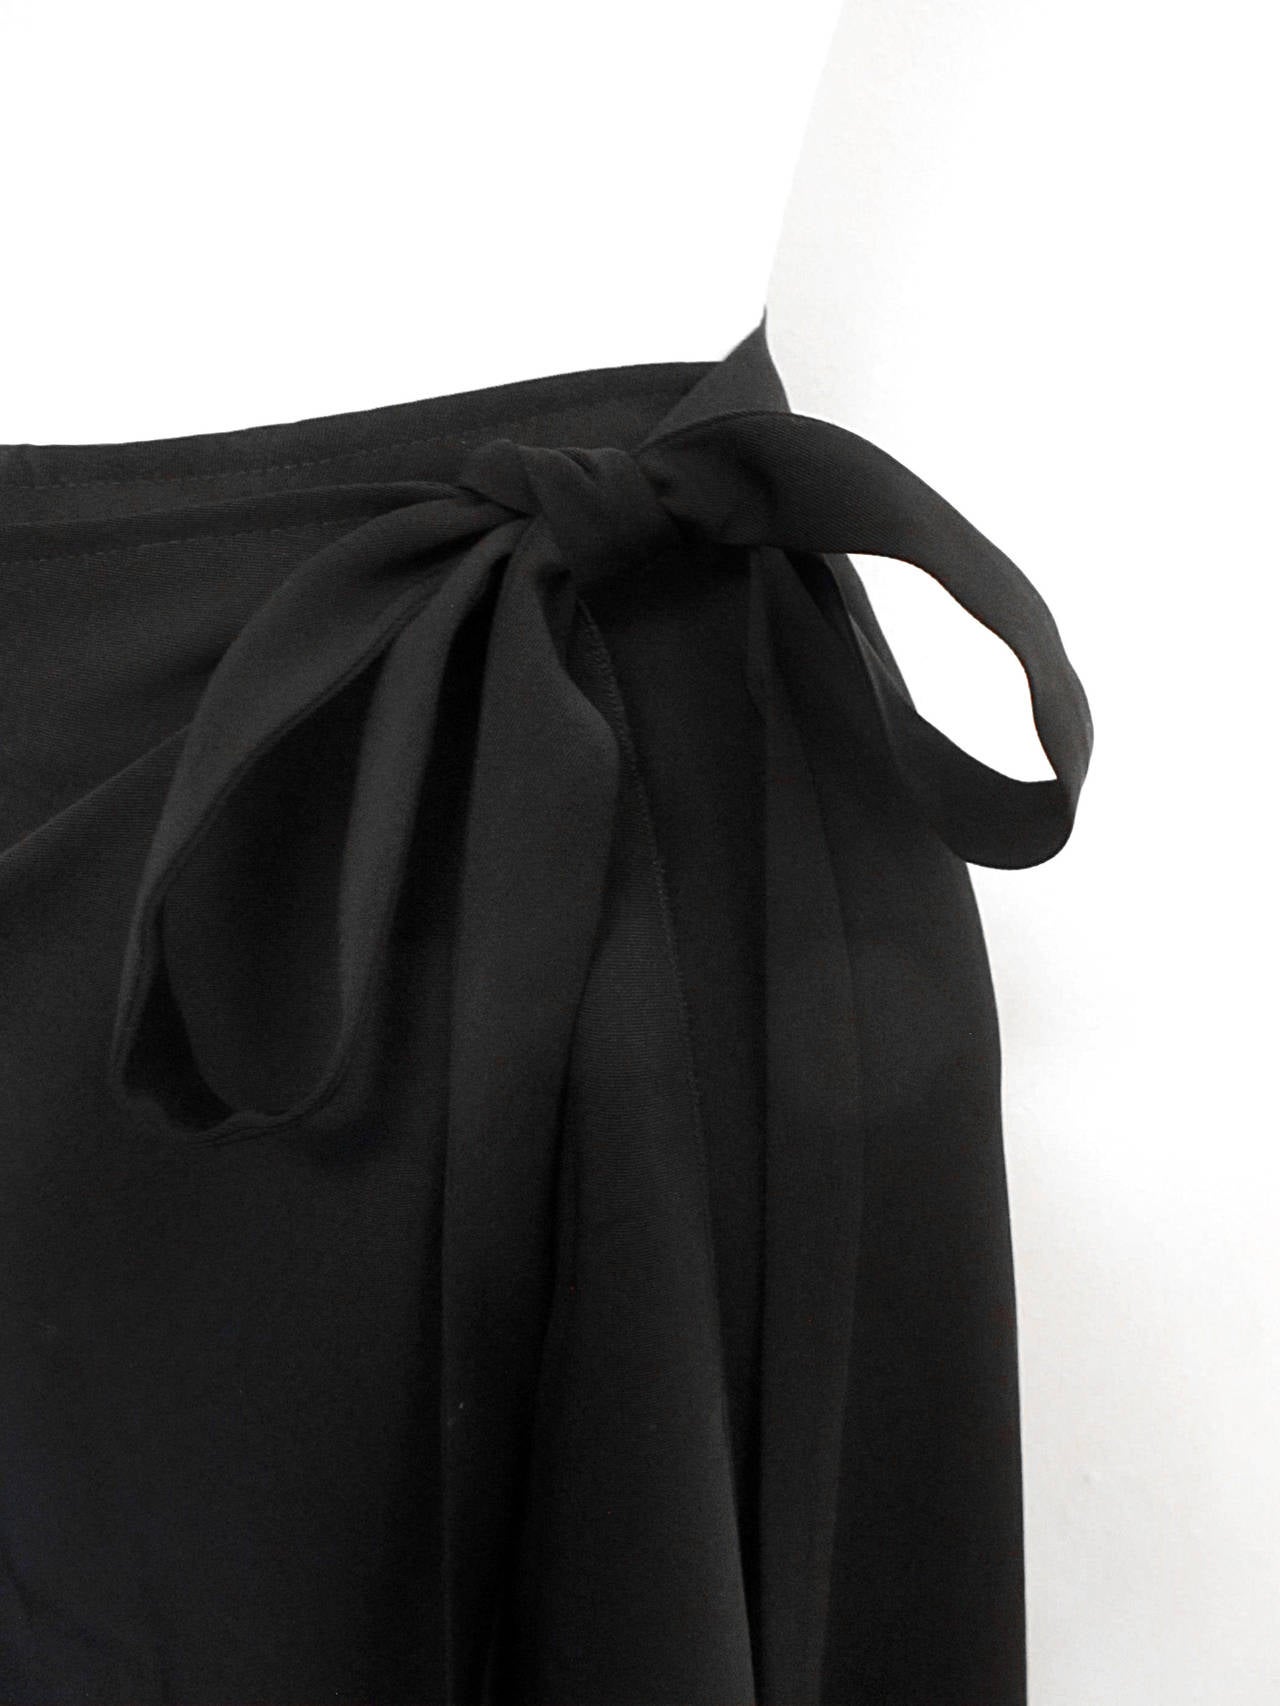 Ivan Grundahl Wraparound Asymmetrical Black Skirt with Spiral Design For Sale 2